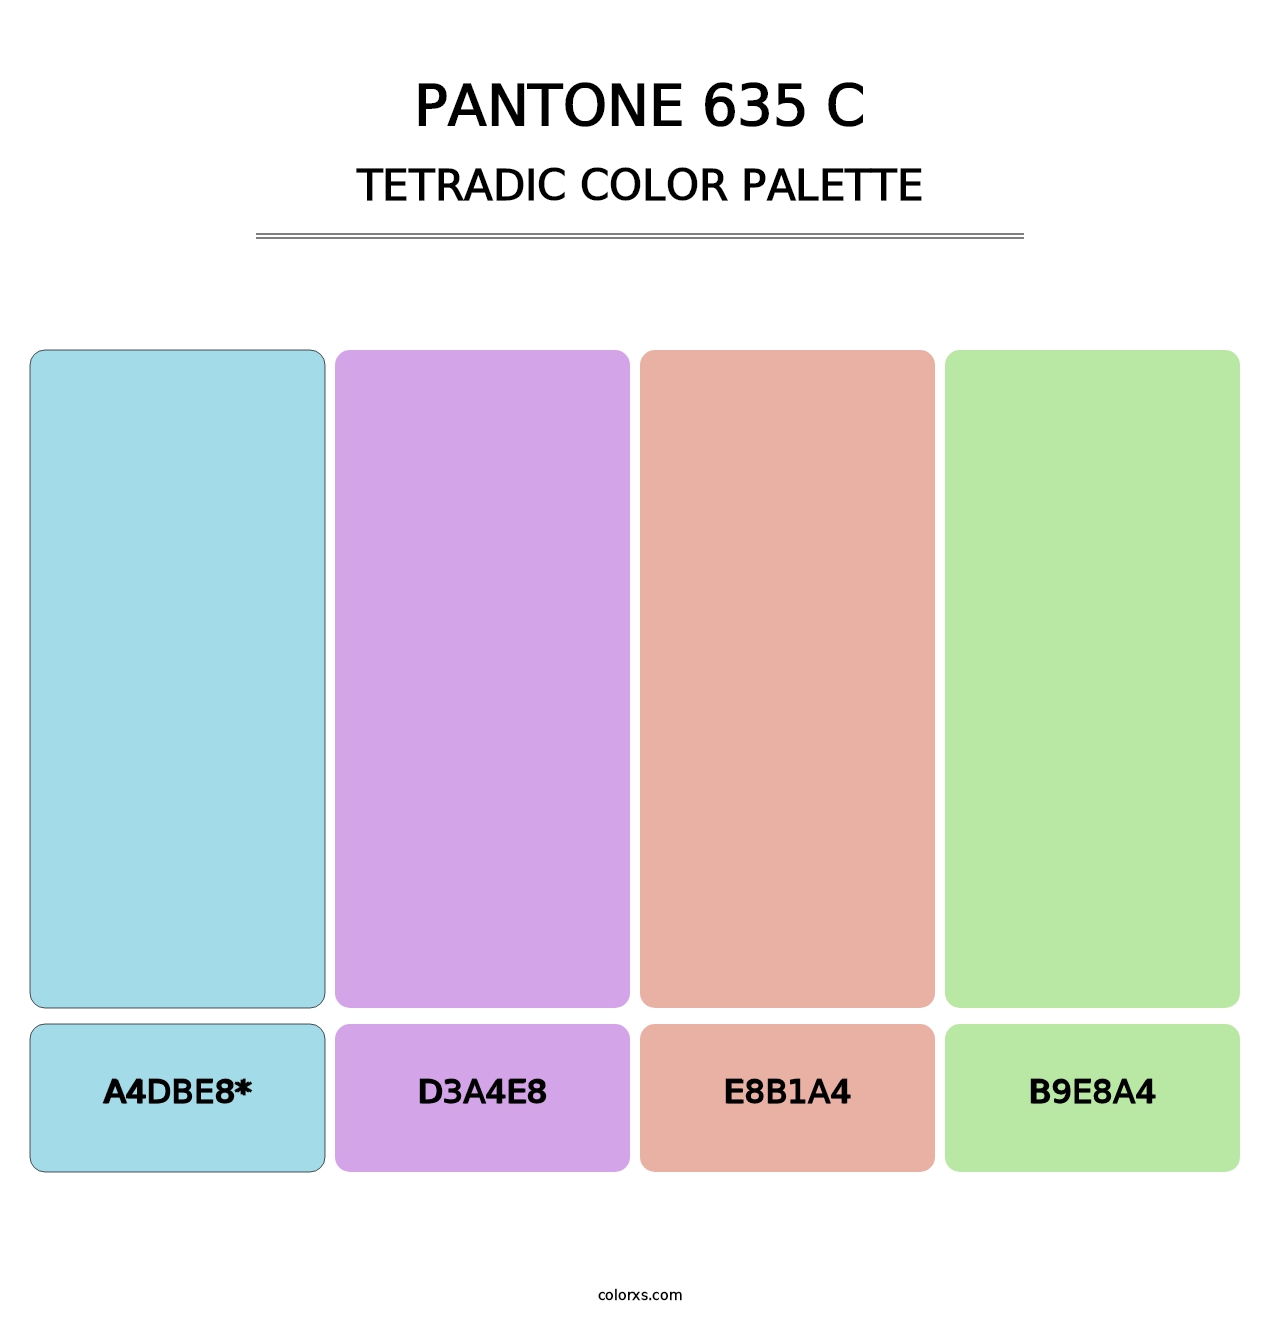 PANTONE 635 C - Tetradic Color Palette